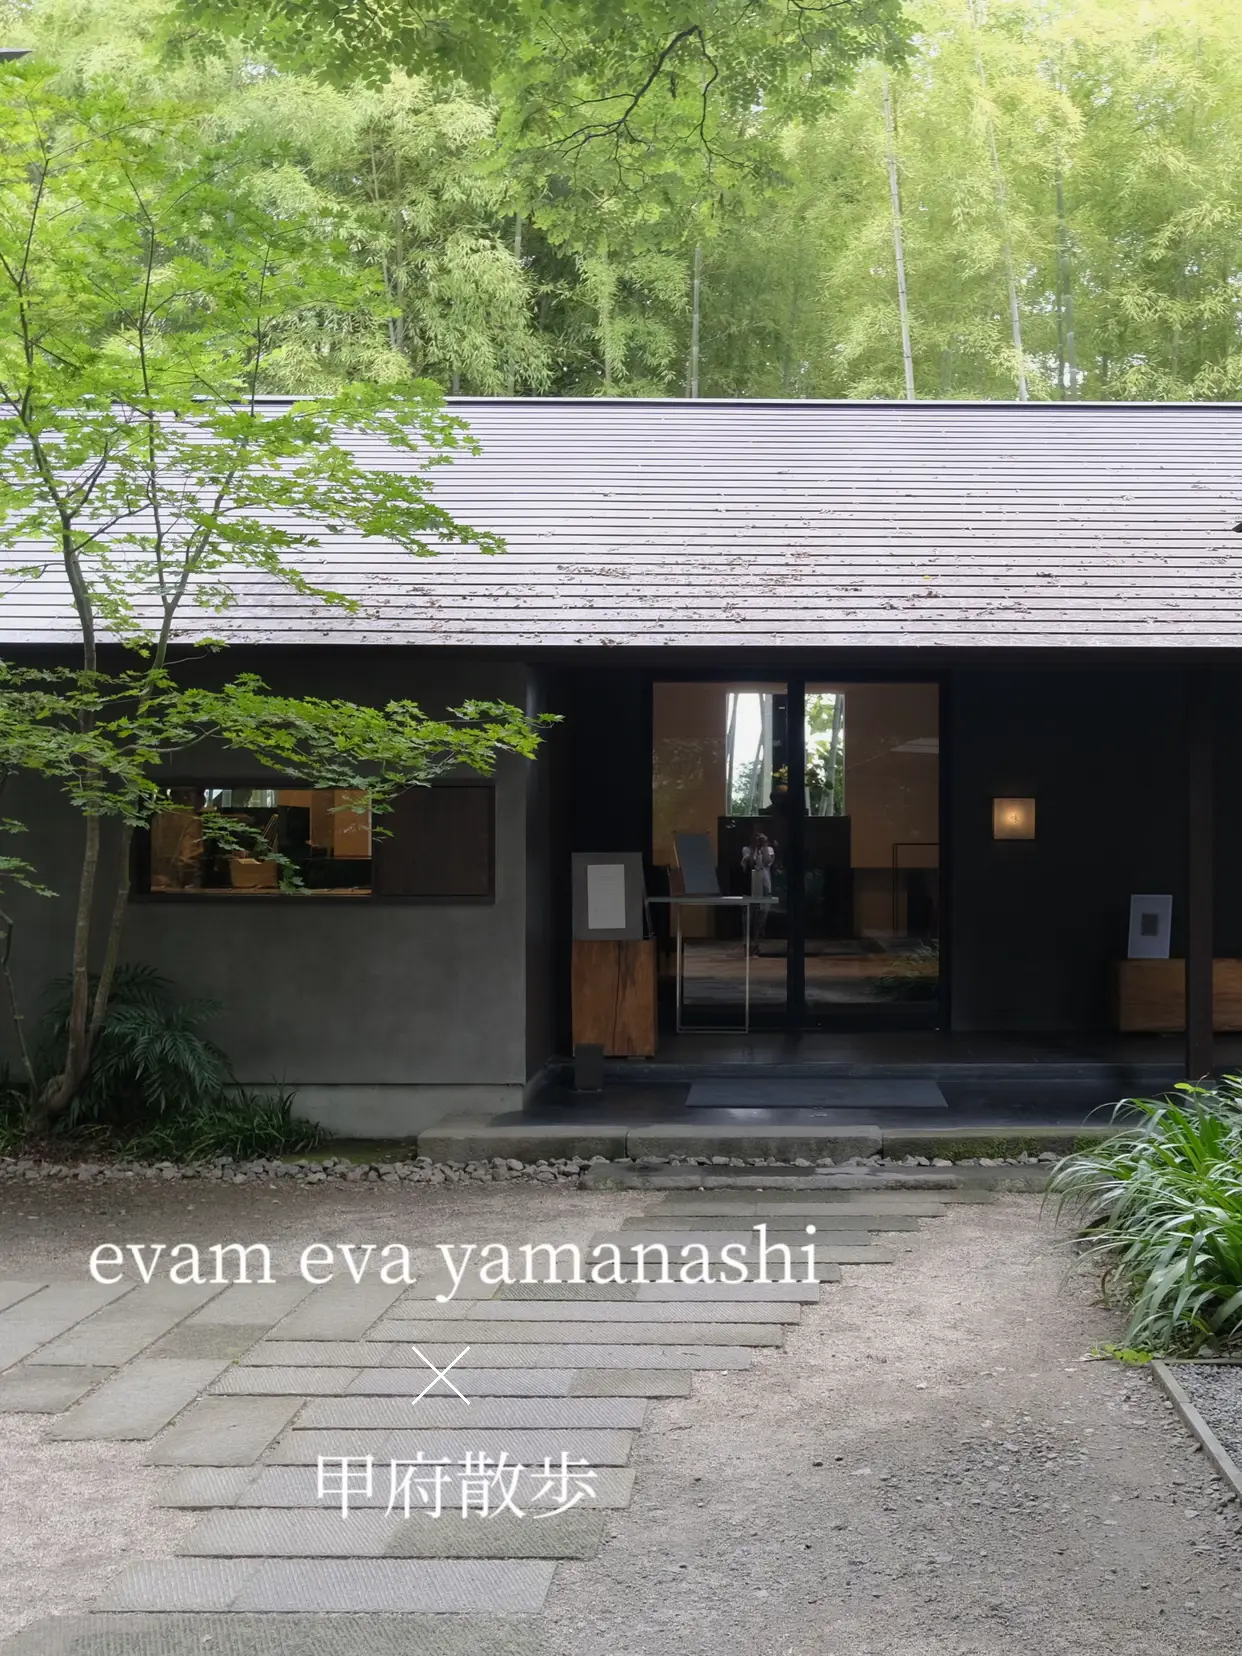 evam eva yamanashi Color (Evam eva Yamanashiiro) -Chuo City, Shop